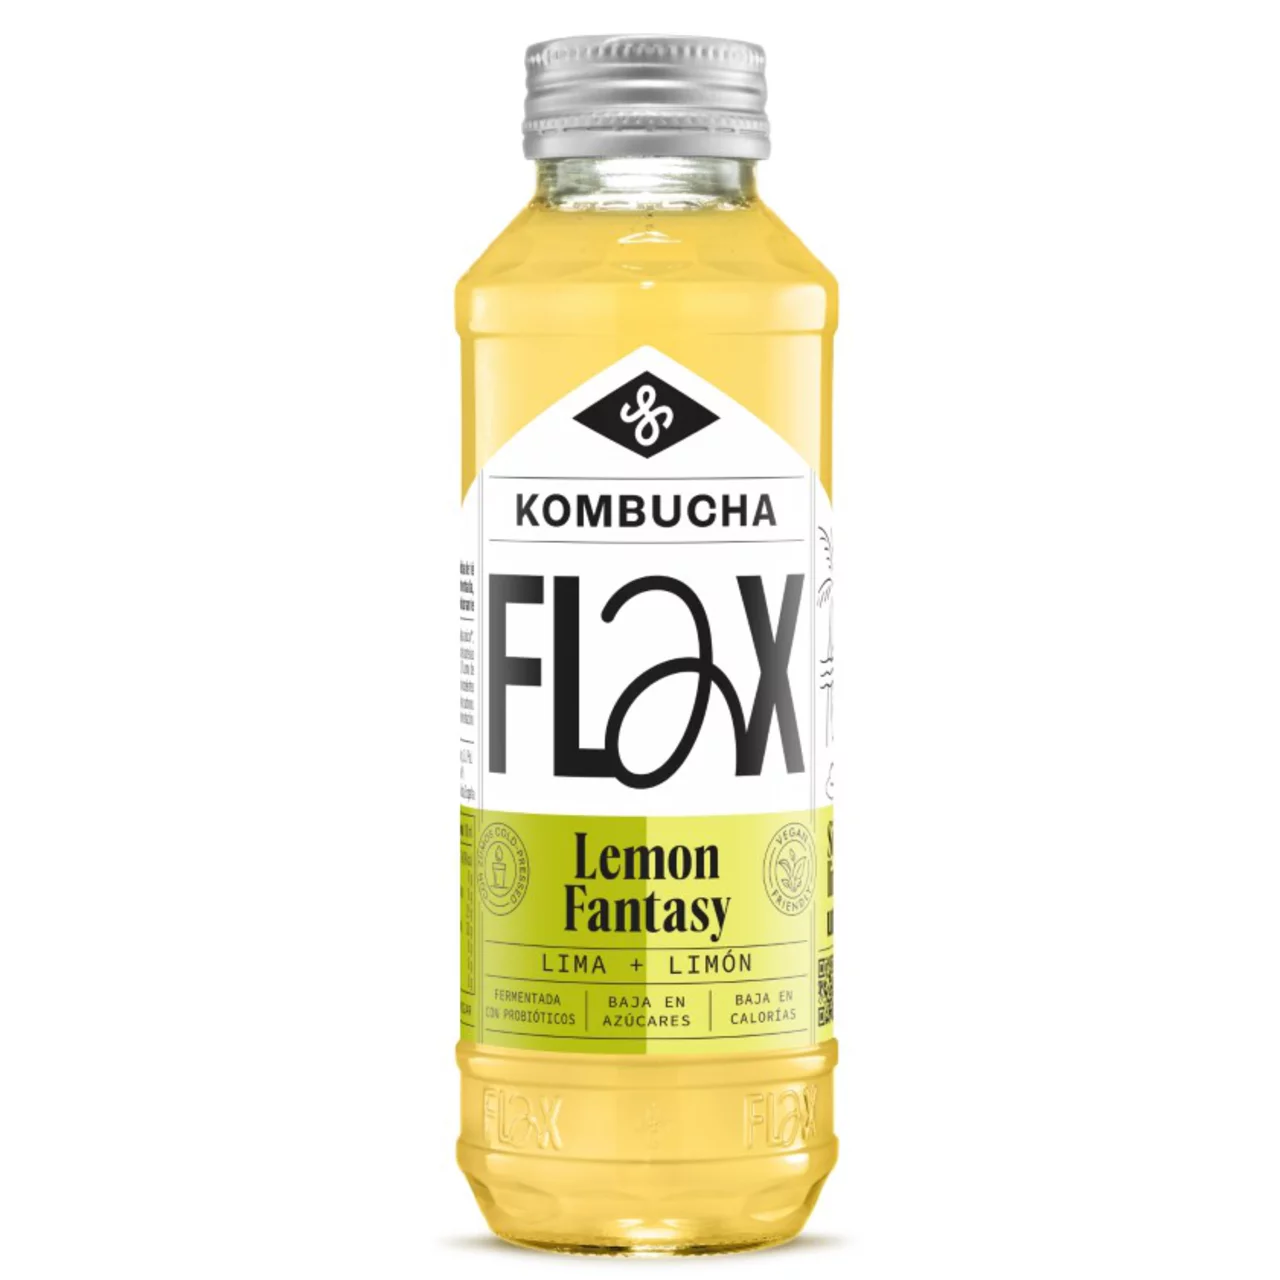 Kombutxa Lemon Fantasy 330ml Flax